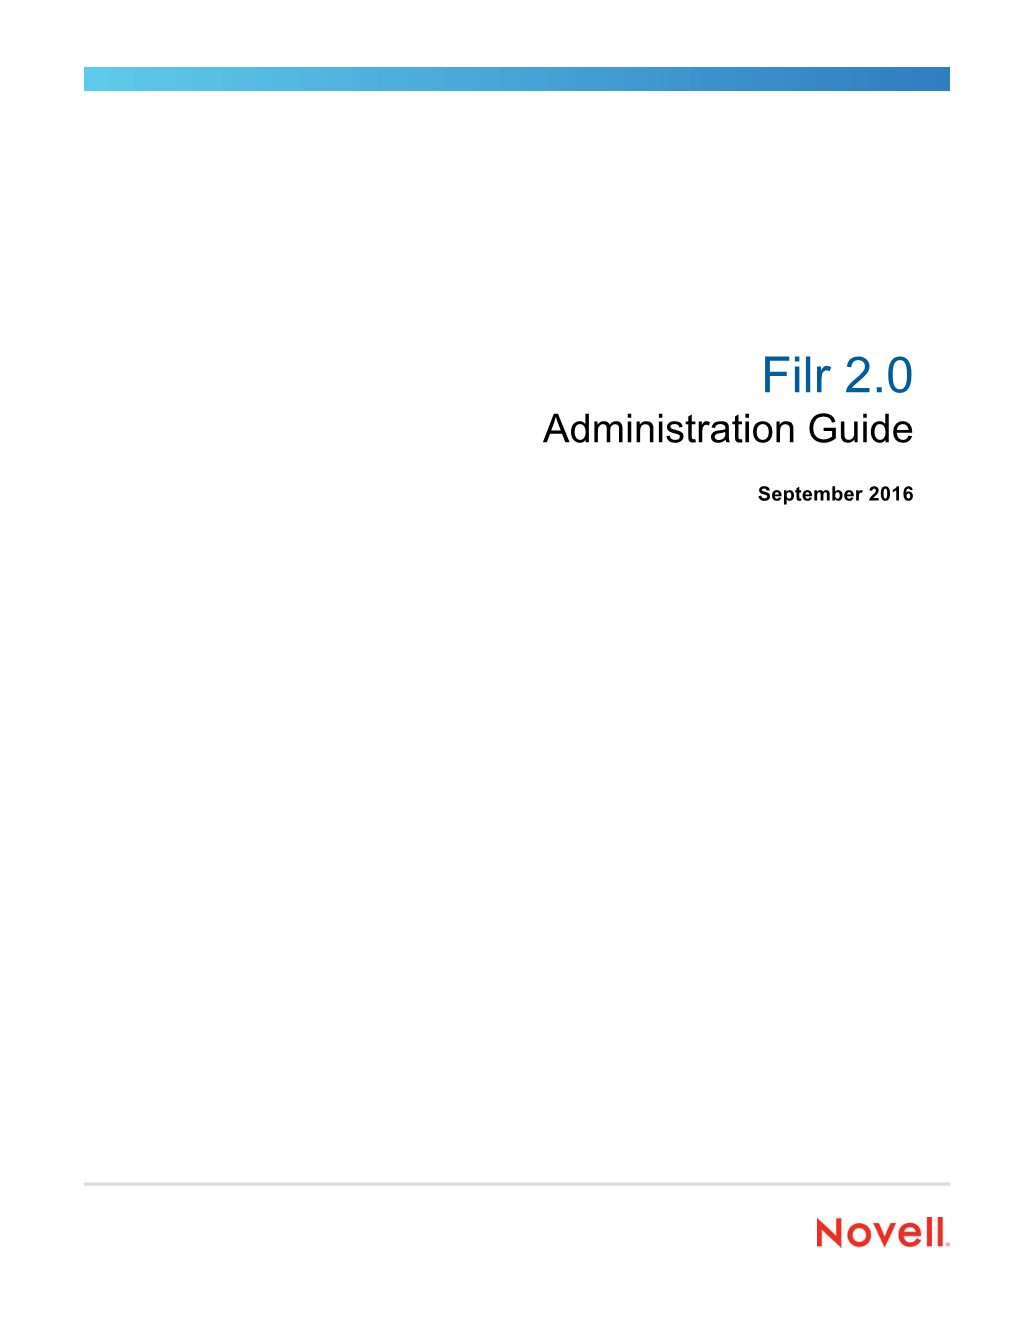 Filr 2.0 Administration Guide